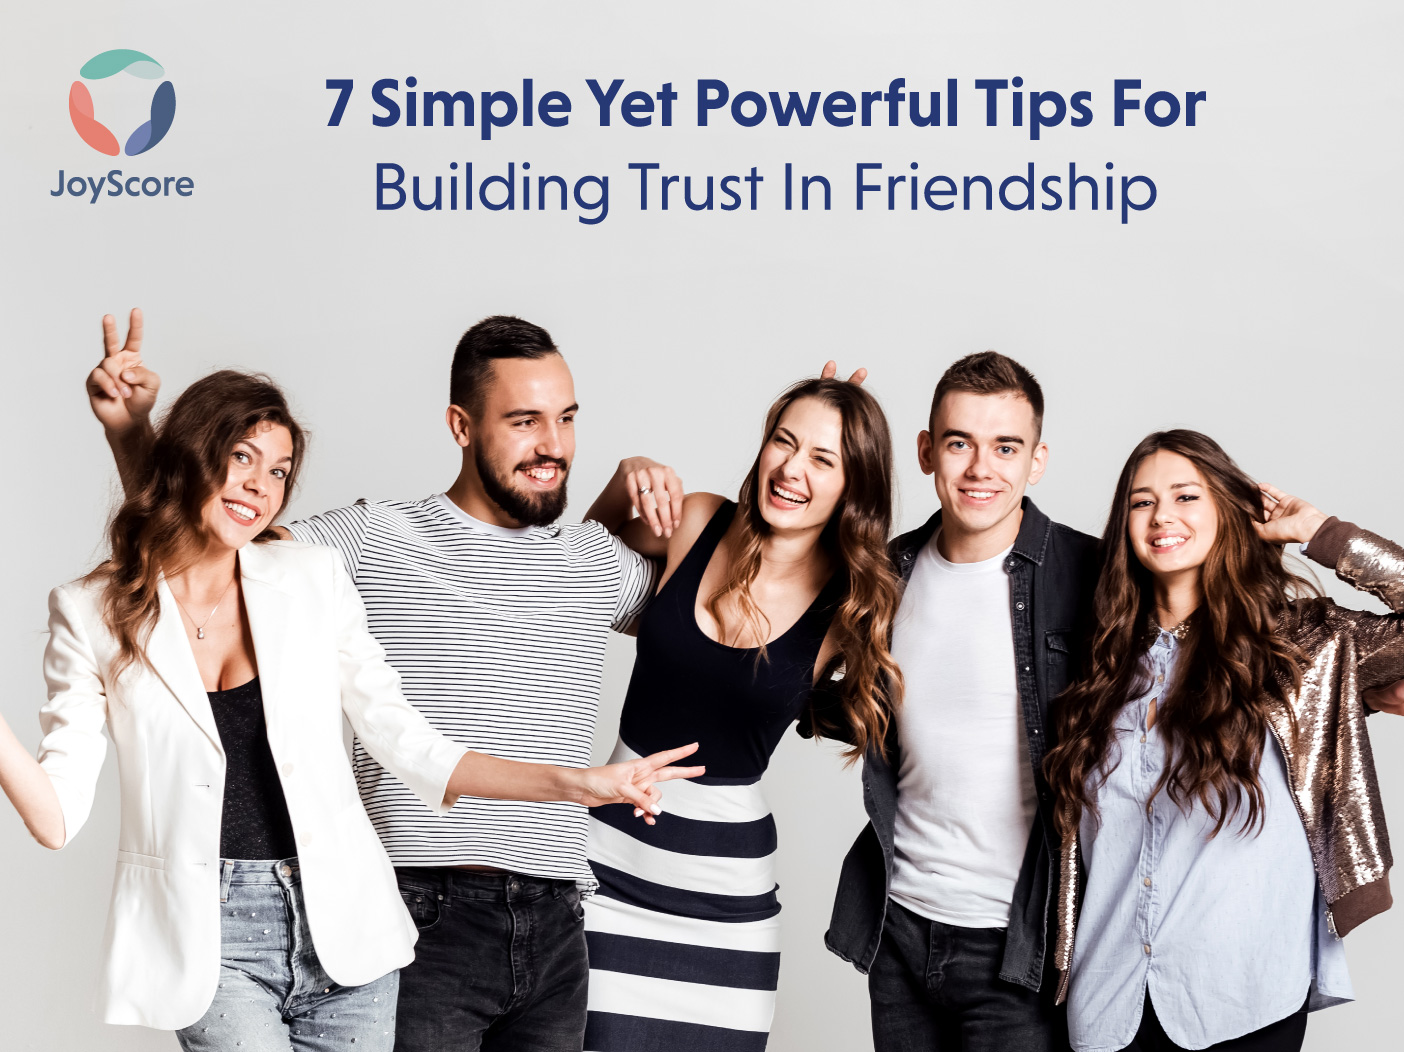 Building trust in friendships